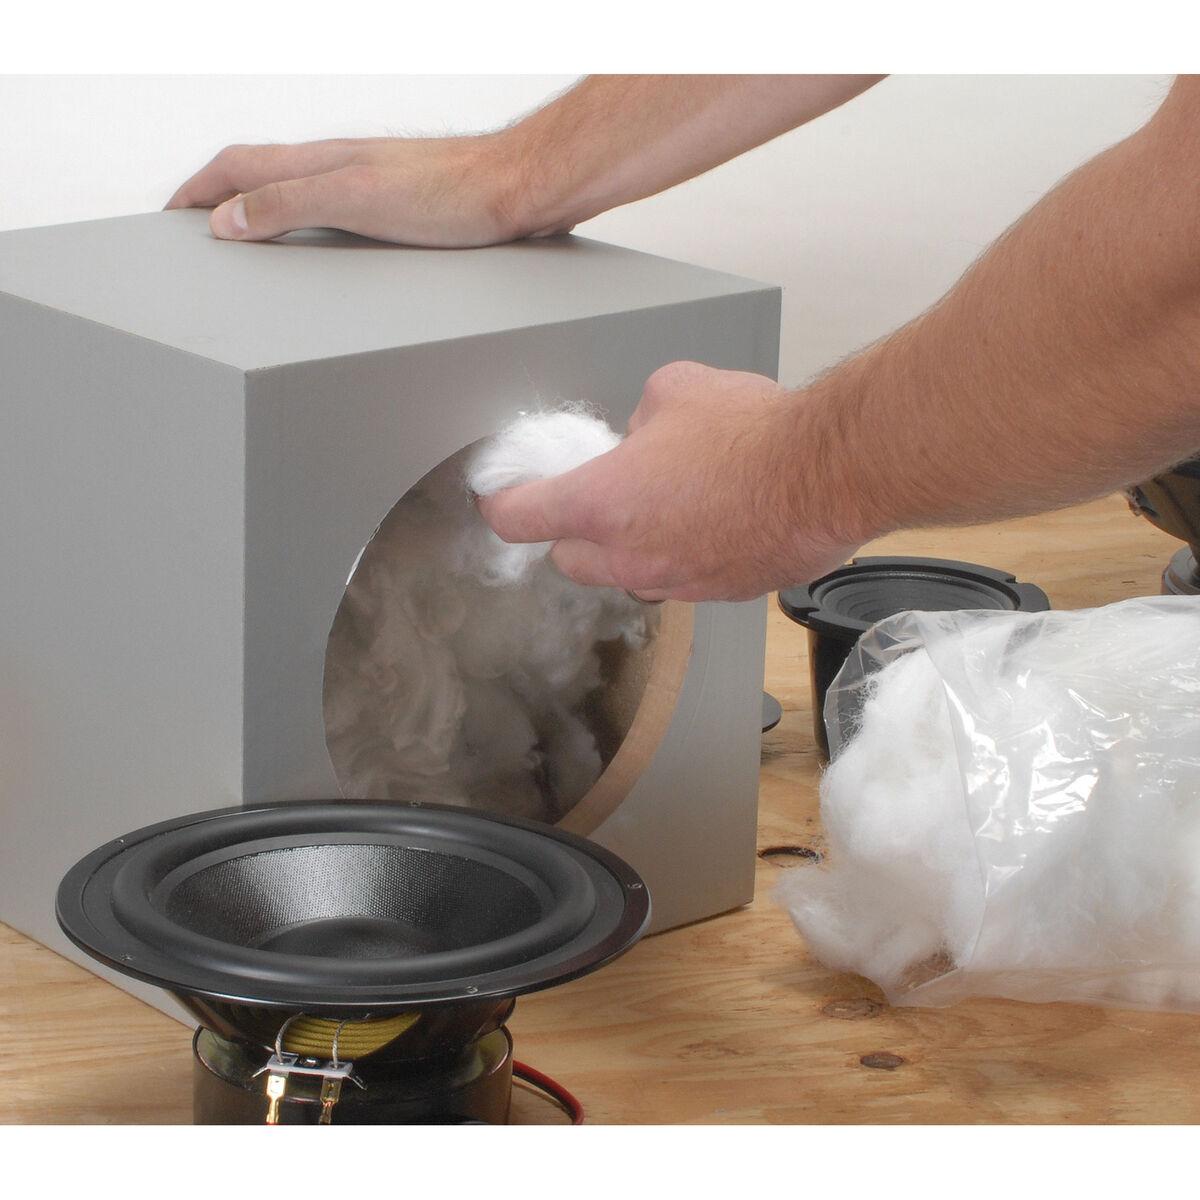 Acousta-Stuf Polyfill 1 lb. Bag Speaker Cabinet Sound Damping Material